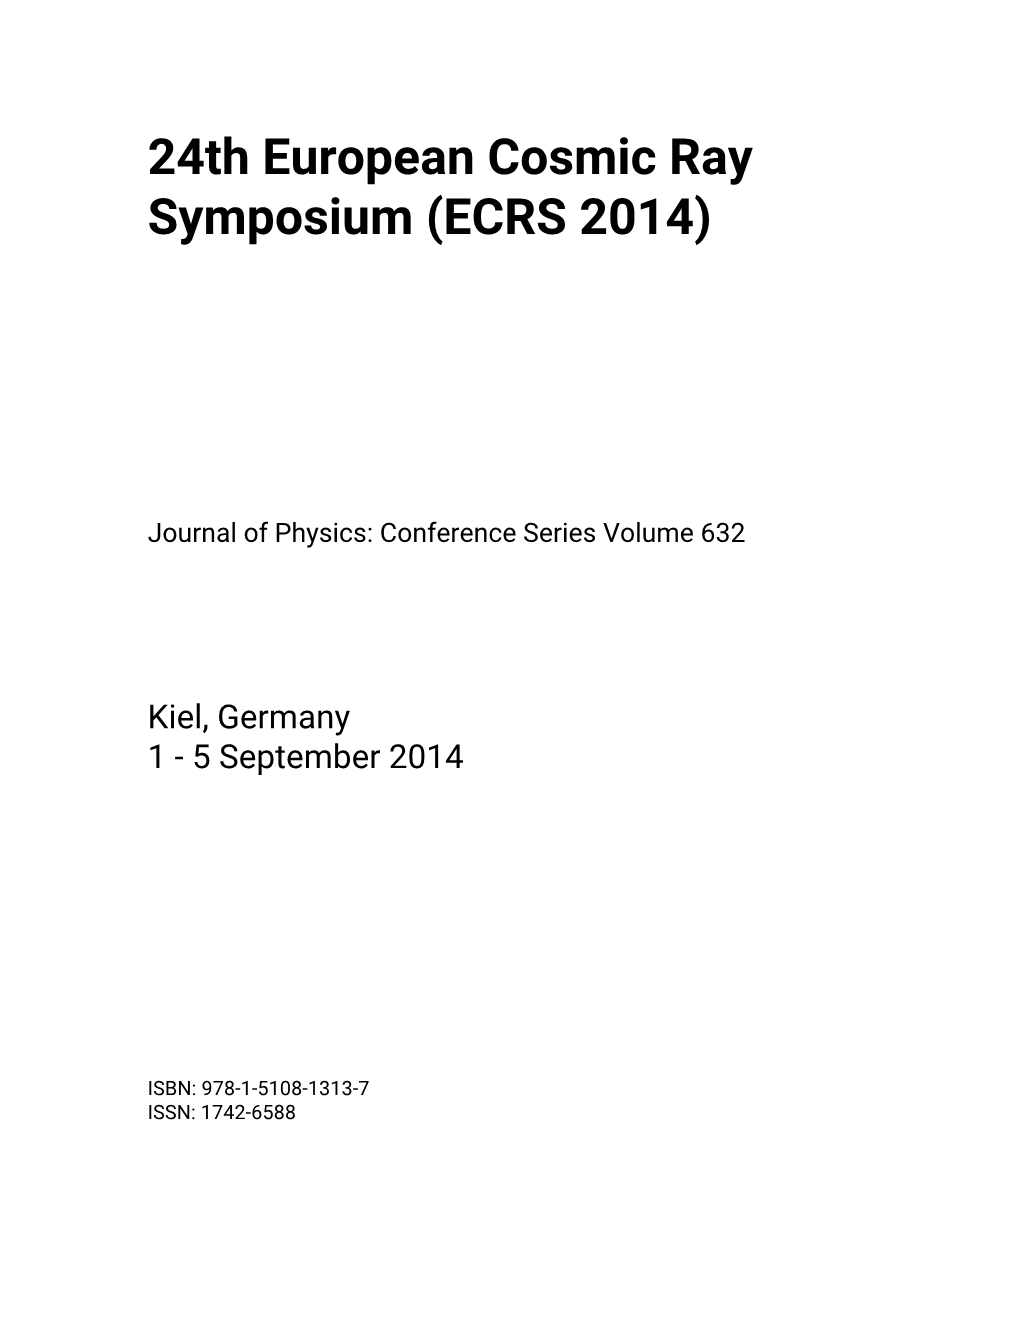 24Th European Cosmic Ray Symposium (ECRS) 1–5 September 2014, Kiel, Germany